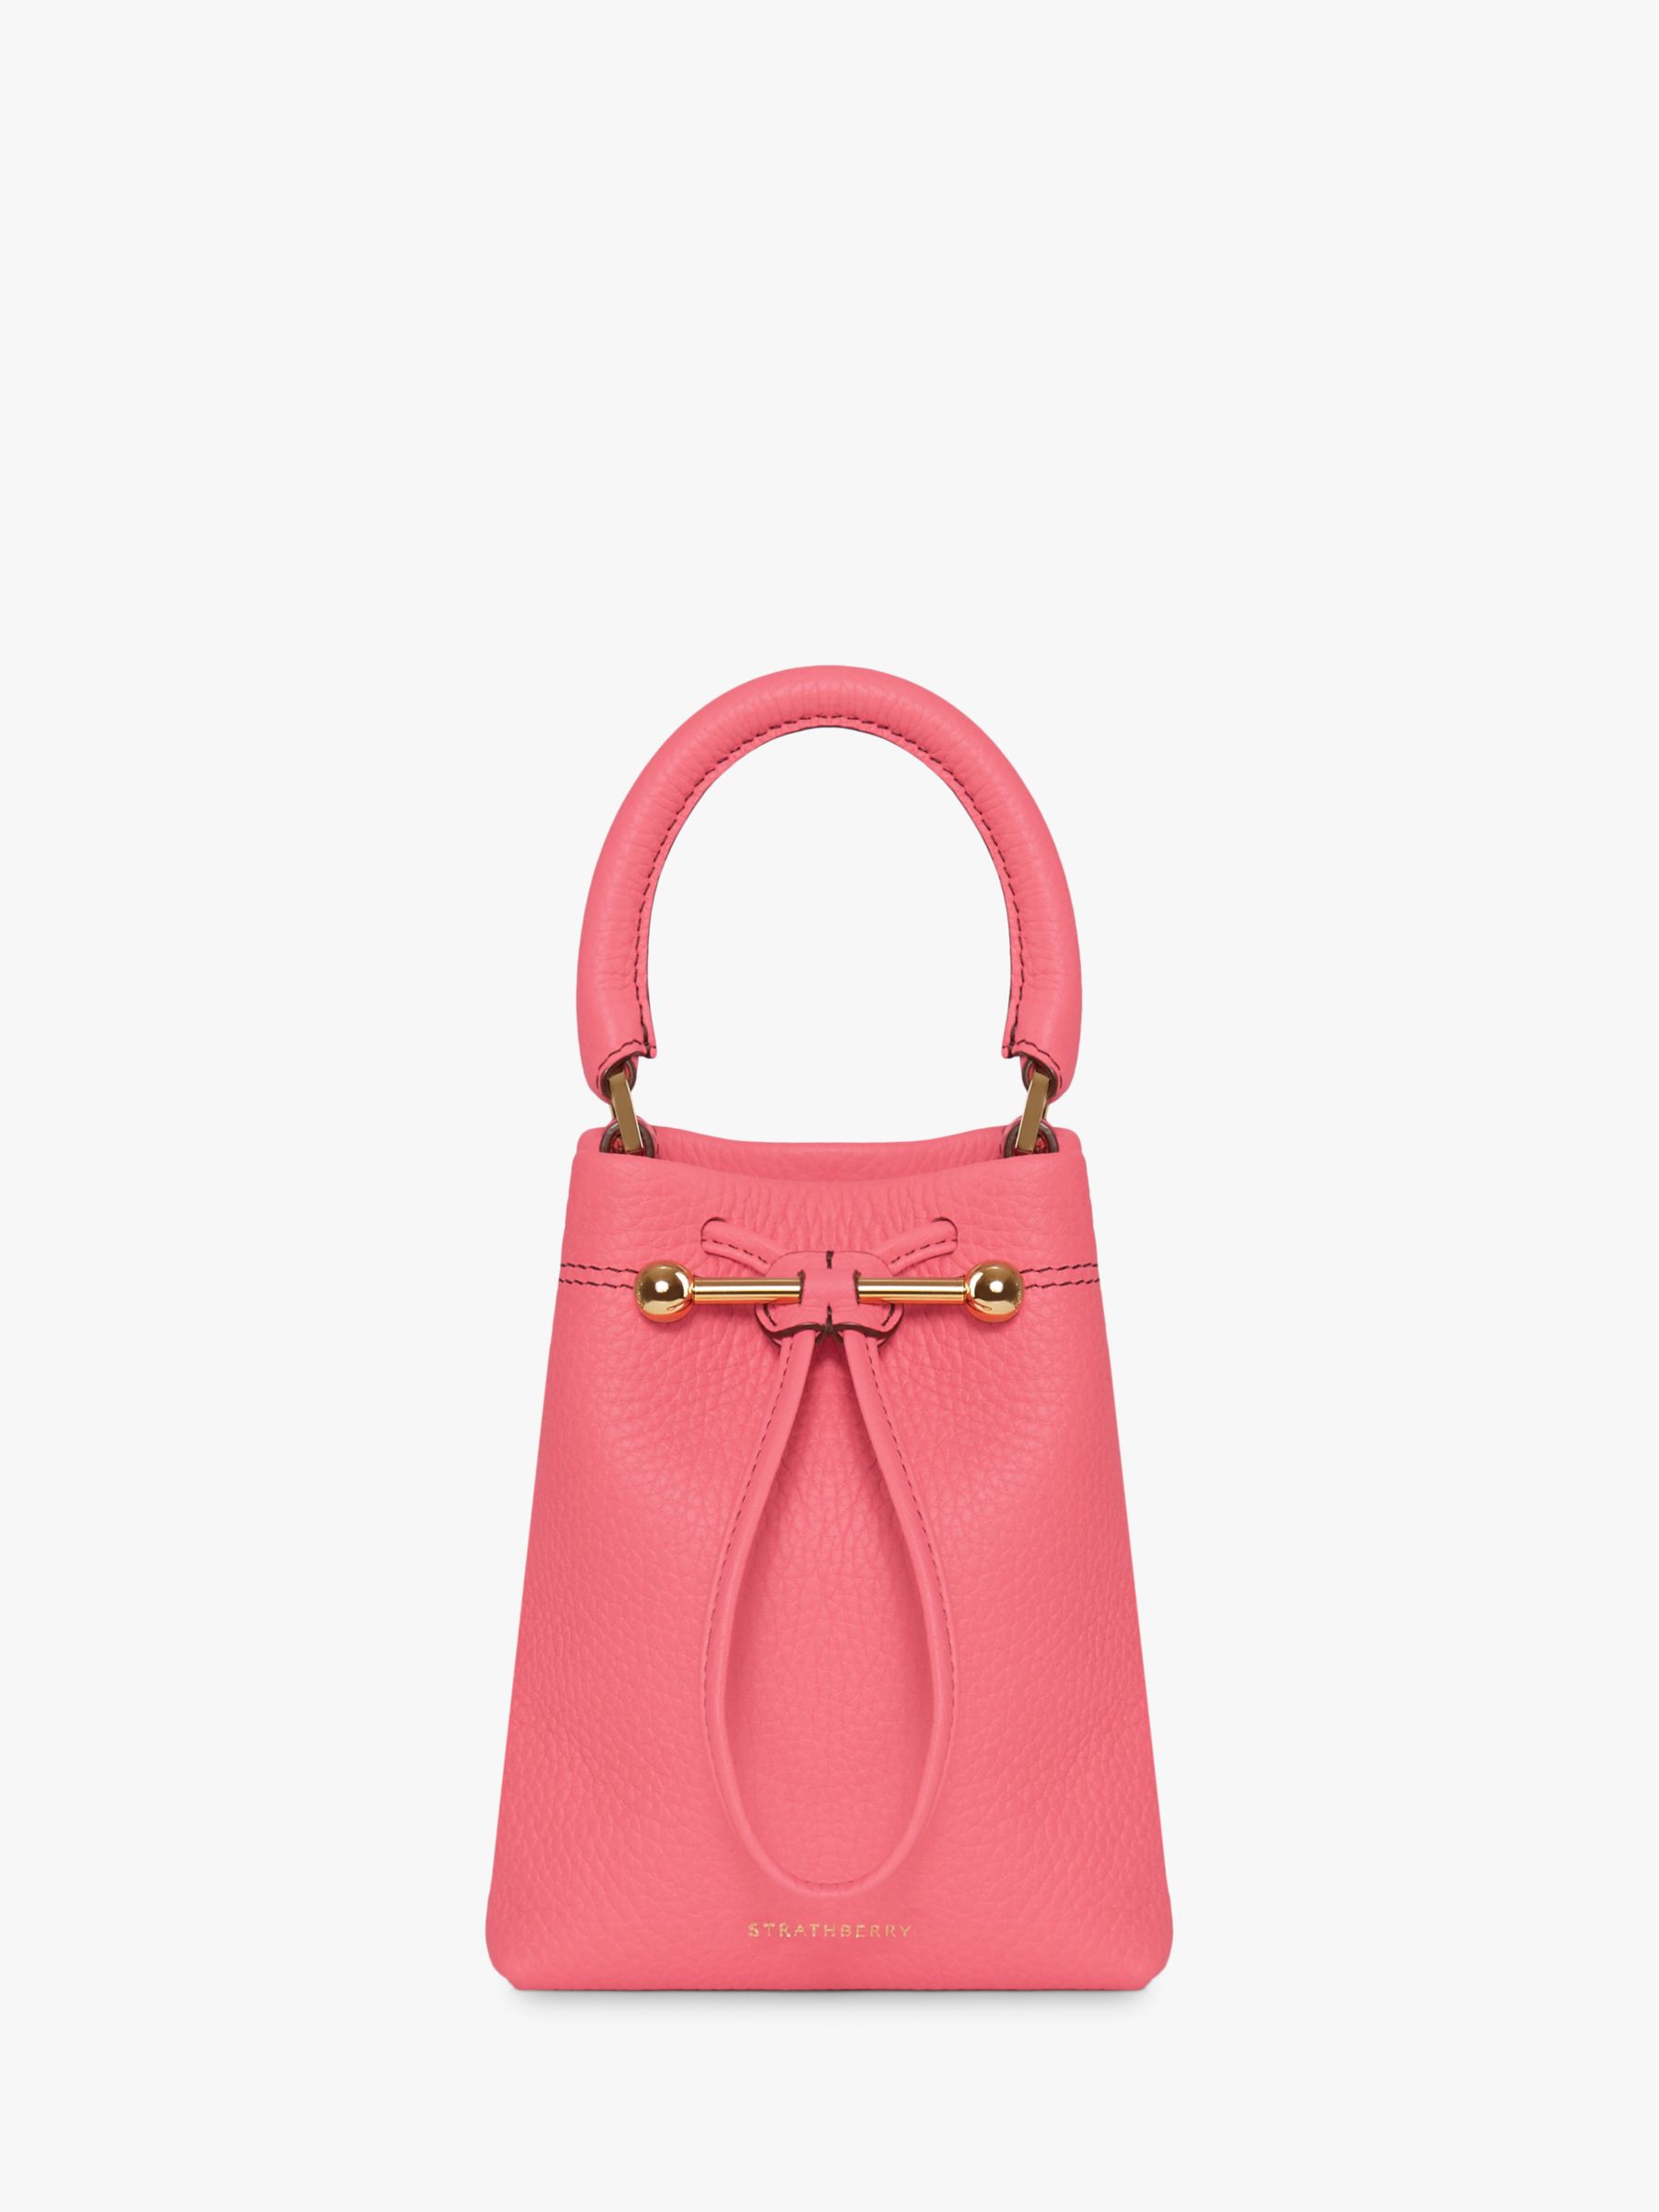 Strathberry - Ace Mini - Crossbody Leather Mini Handbag - Pink for Women